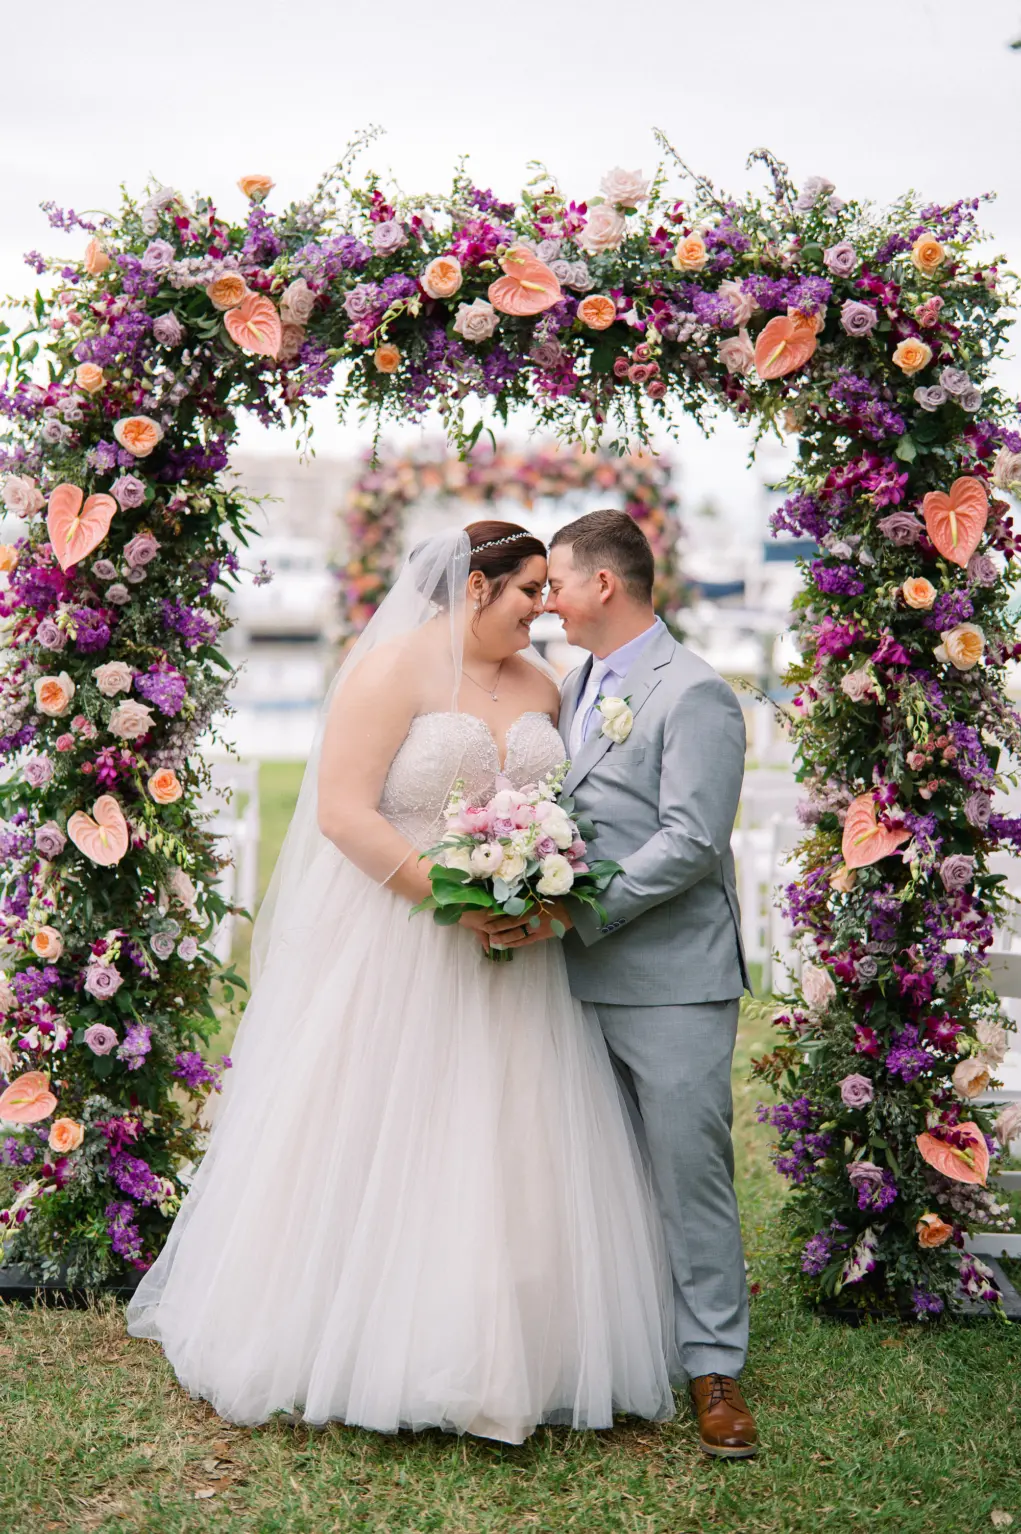 Bride and Groom Just Married Wedding Portrait | Tampa Bay Florist Botanica International Design Studio